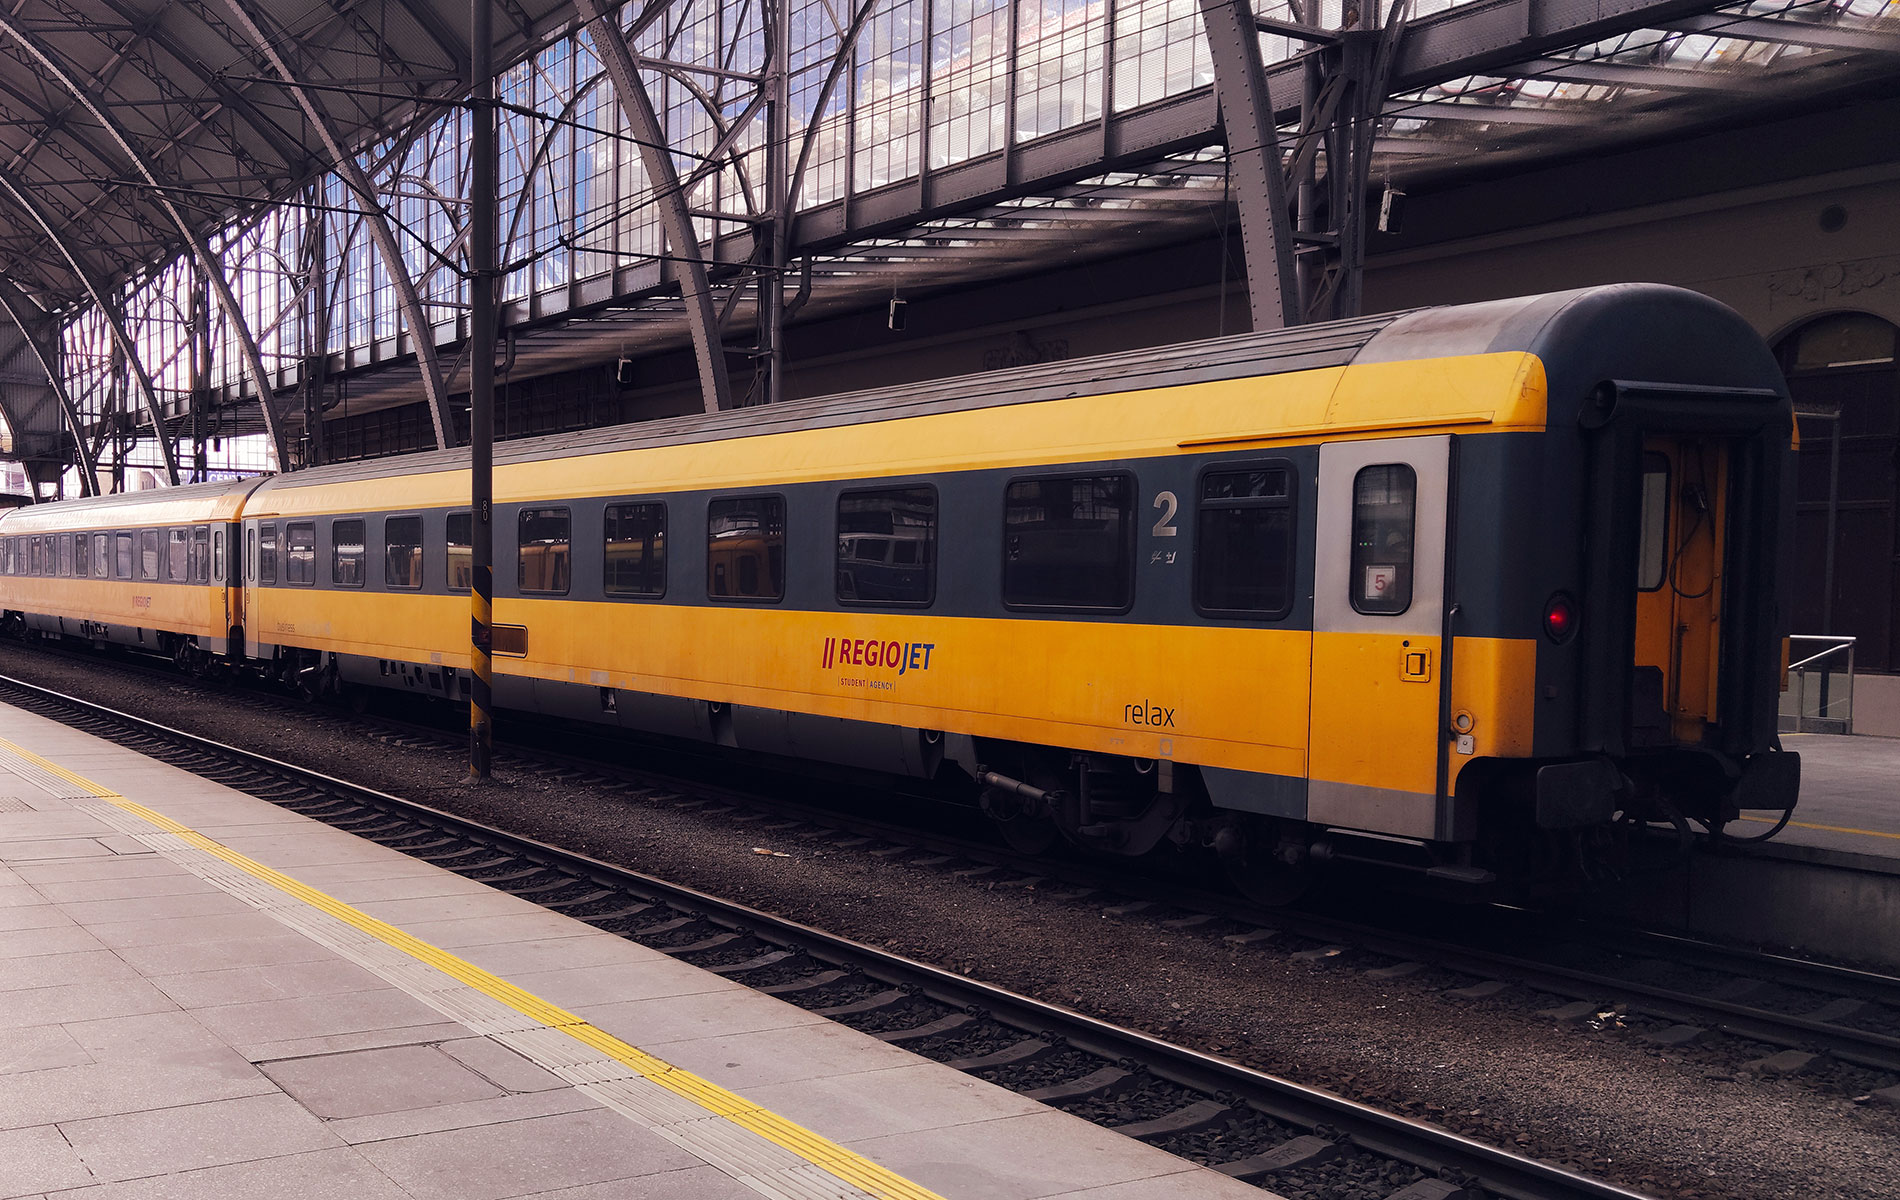 RegioJet train with its distinct yellow livery at Praha hlavní nádrazí station (photo © Martin Broz / dreamstime.com).